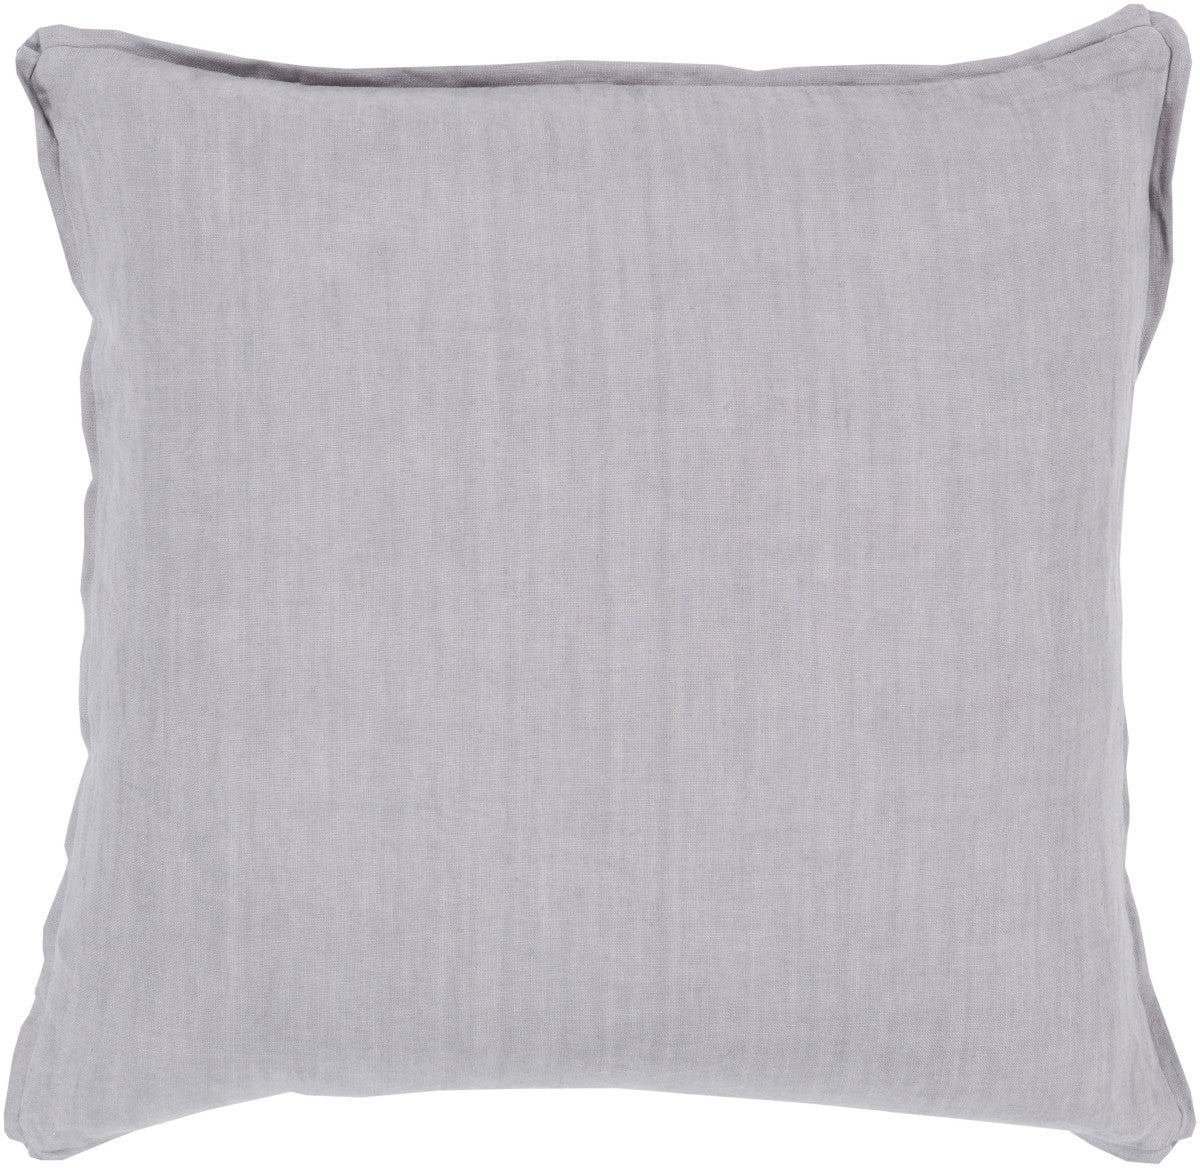 Surya Solid Luxury in Linen SL-004 Pillow main image